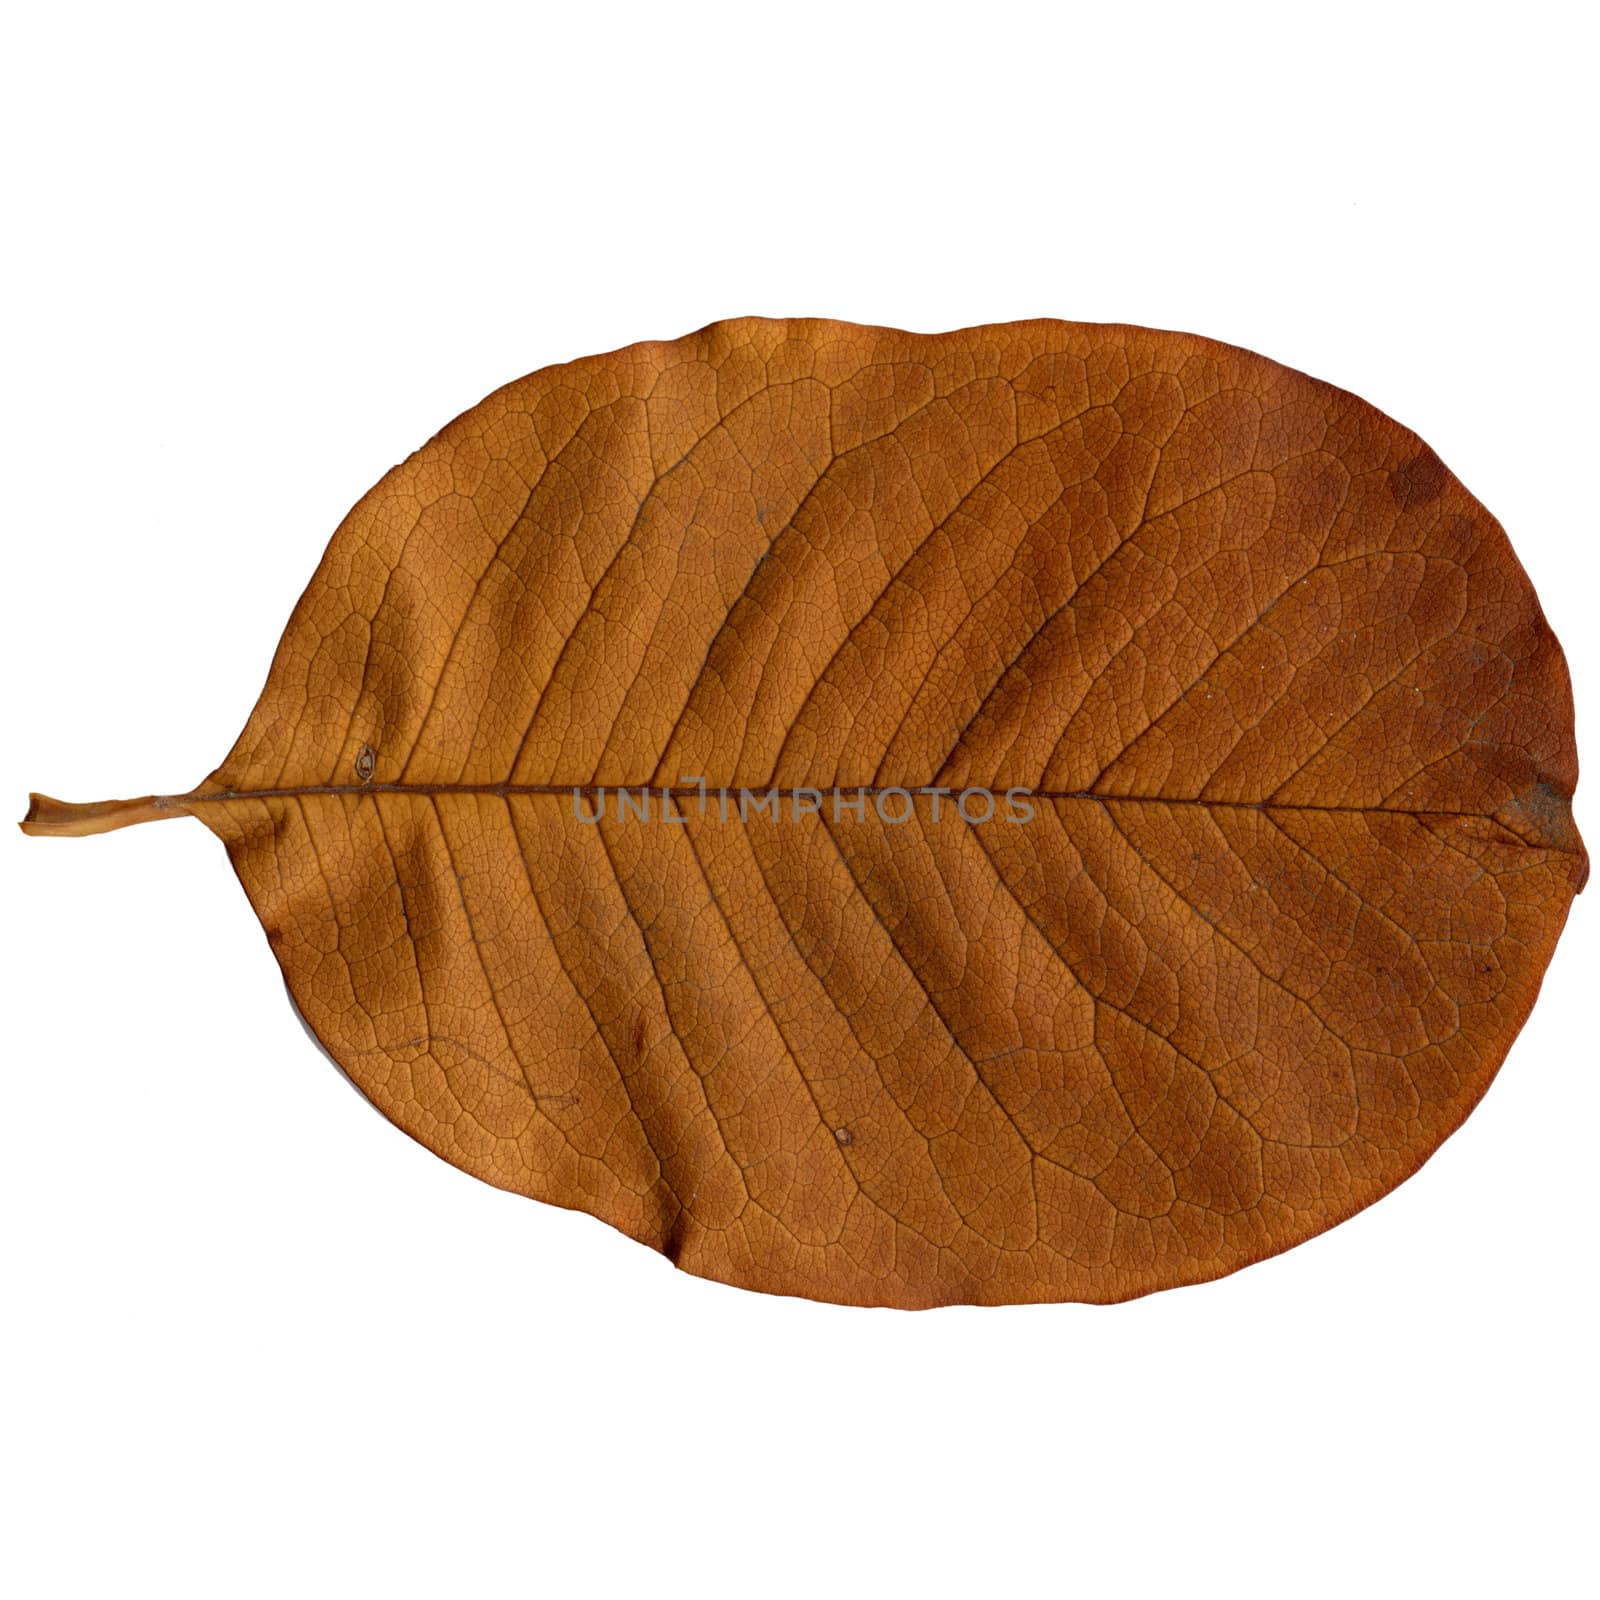 Leaf by claudiodivizia